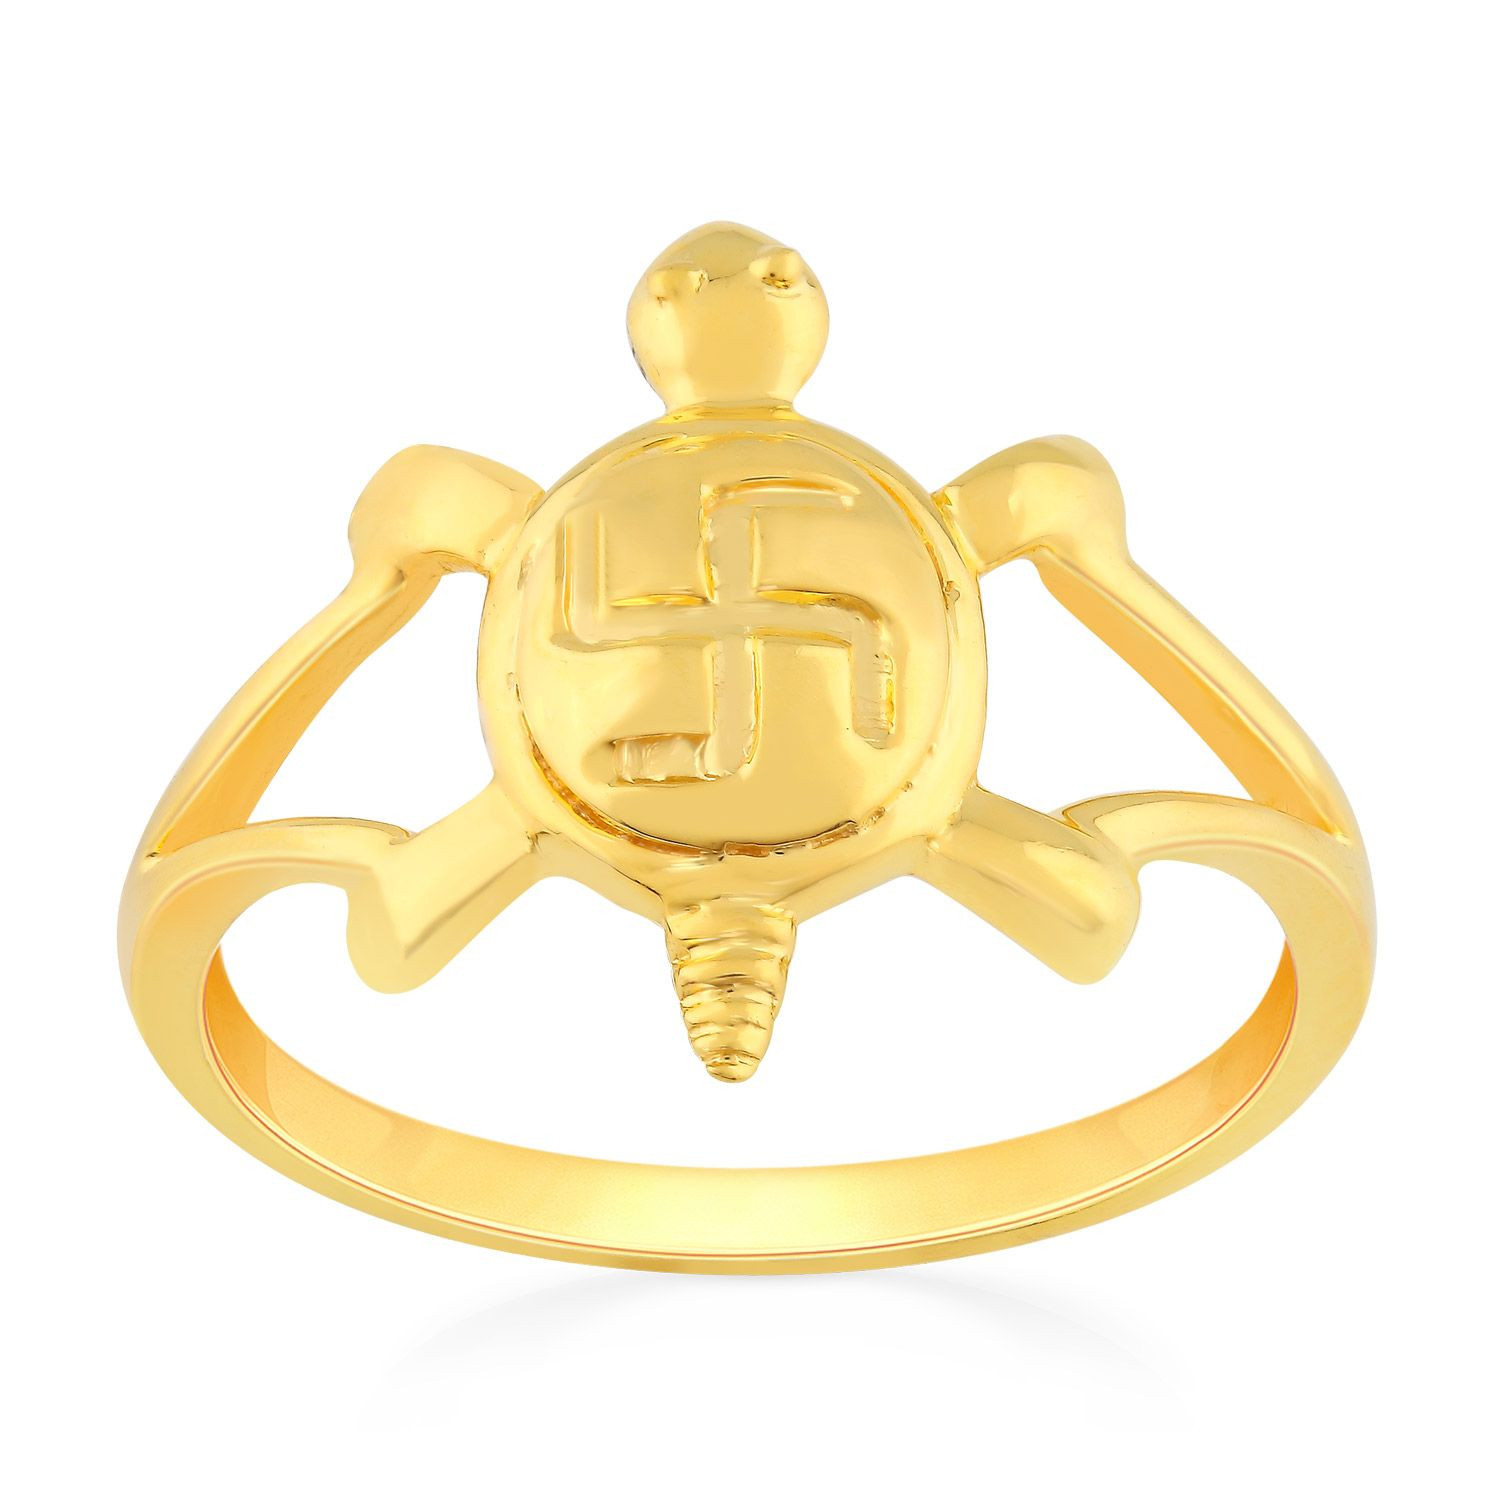 Malabar 22 KT Gold Studded Casual Ring FRNOSKY607